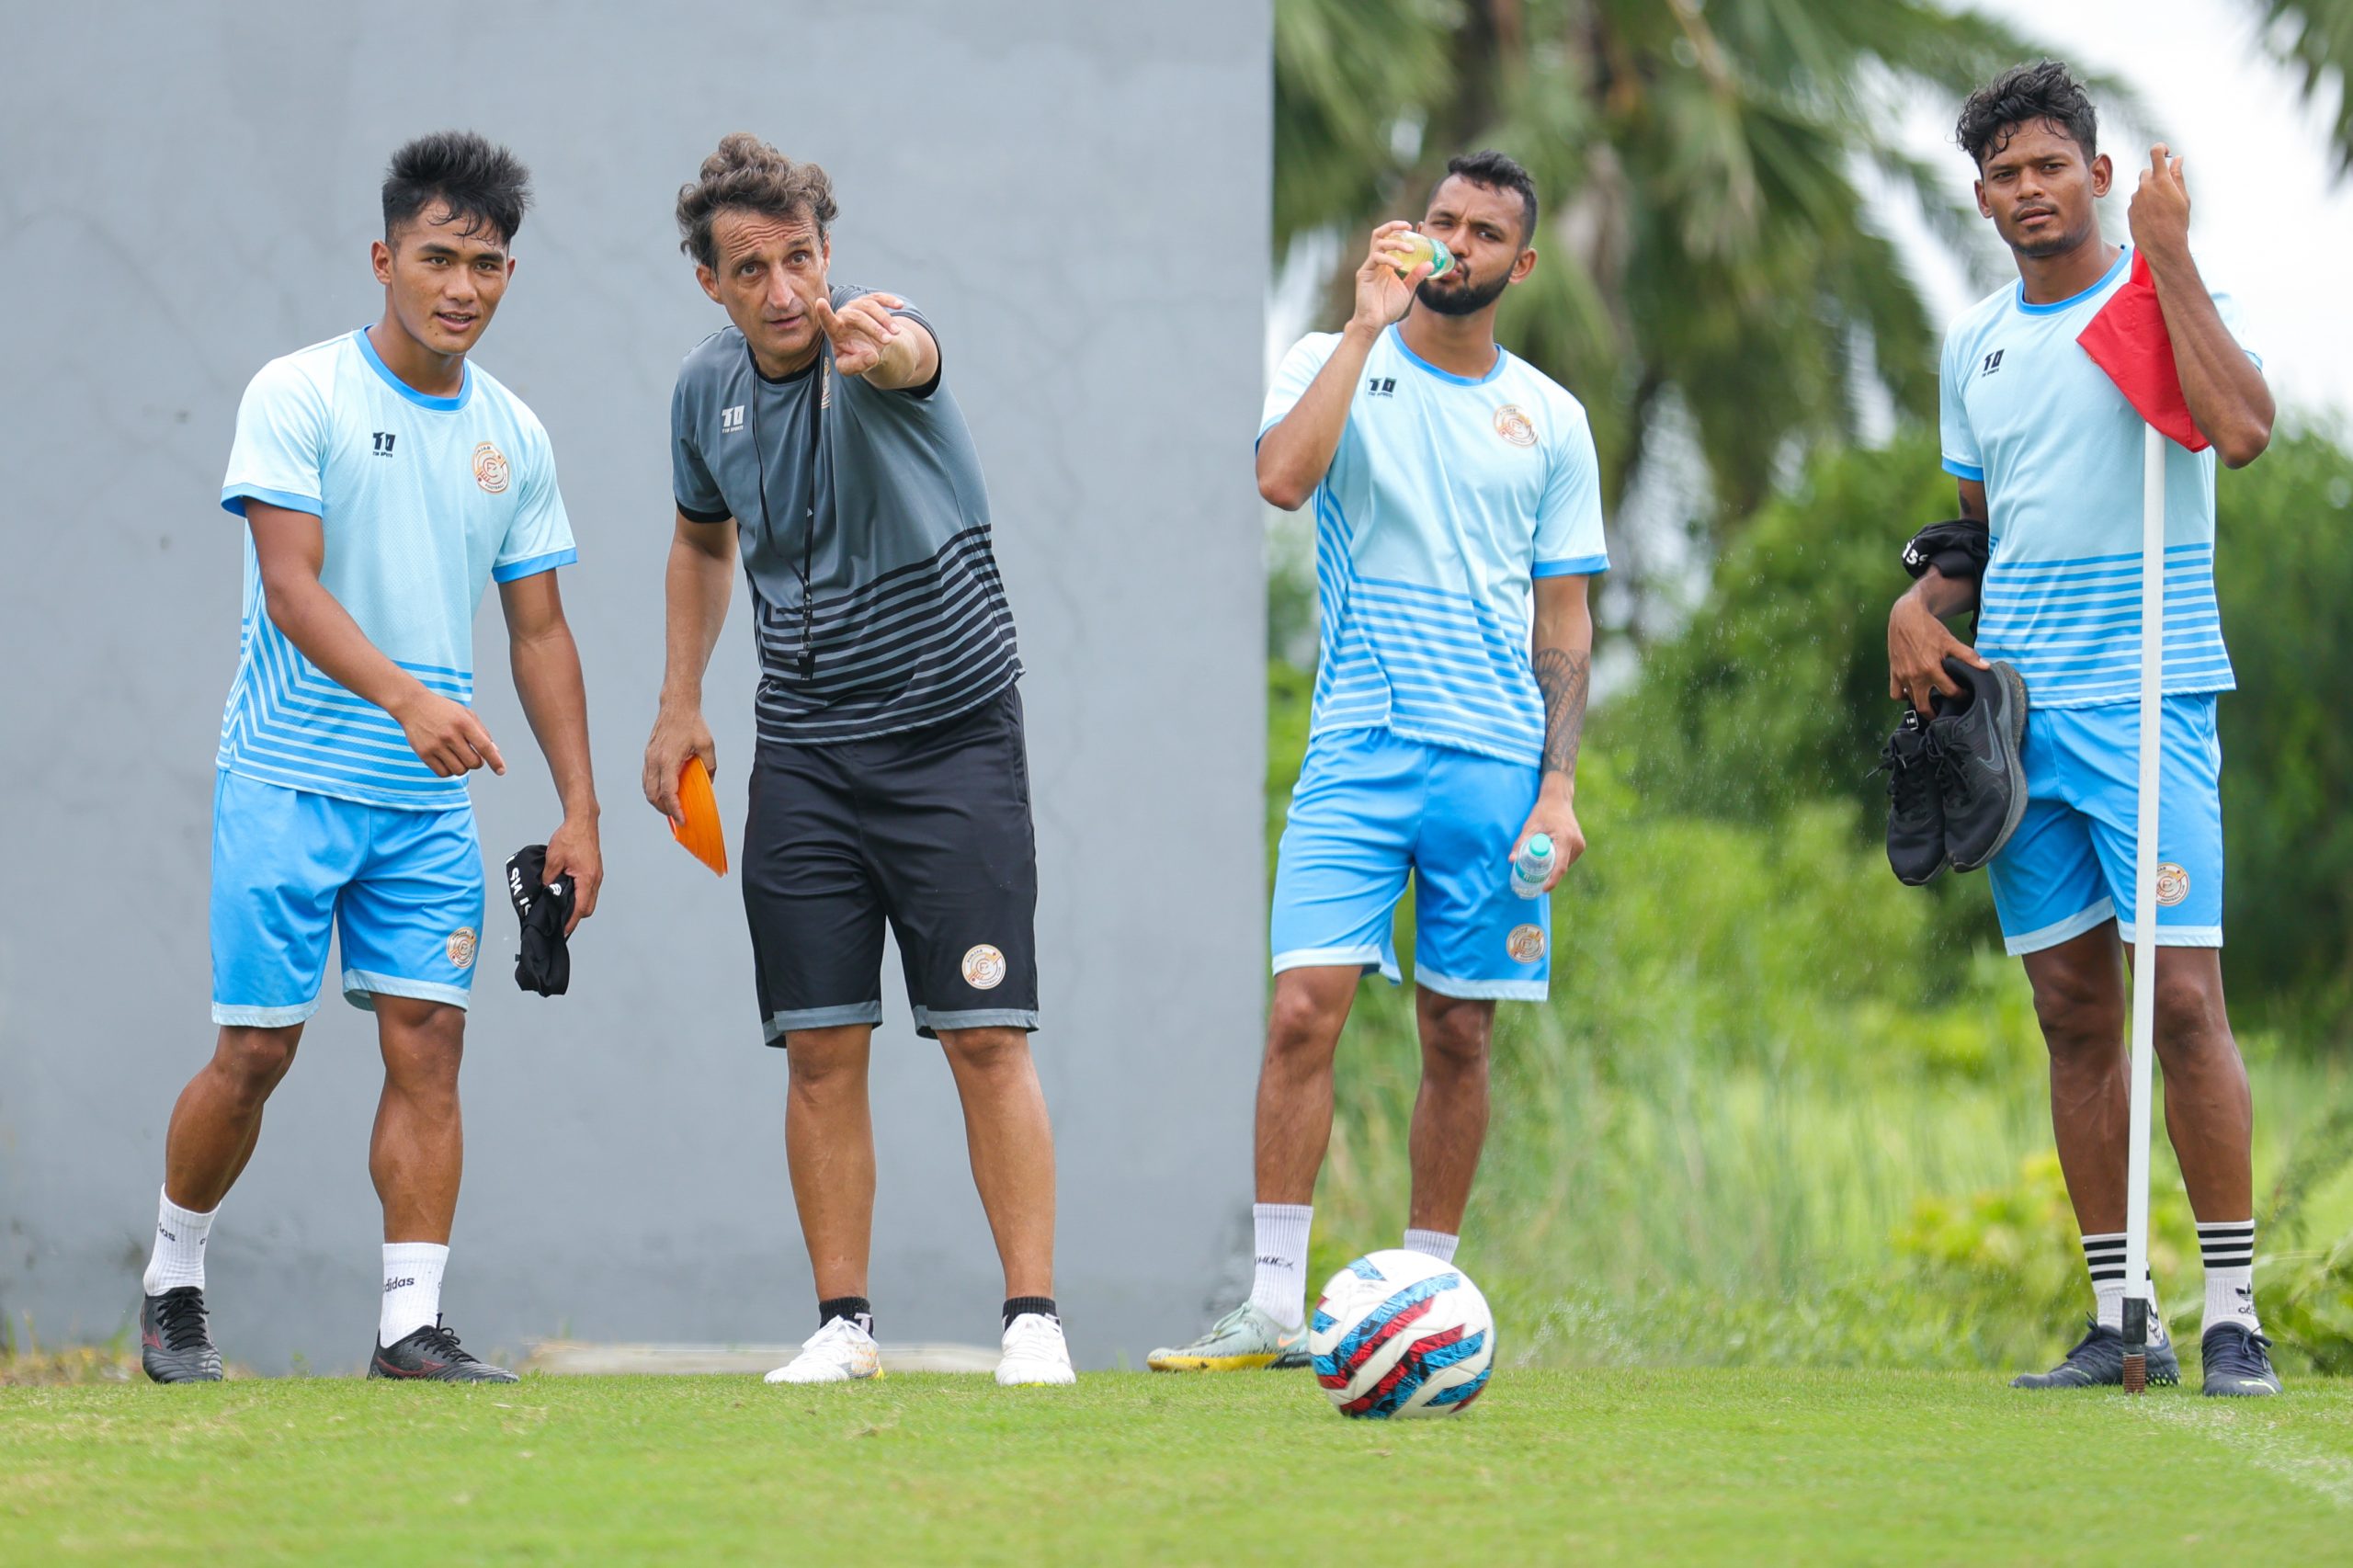 From left to right: Khaiminthang Lhungdim, Assistant Coach Kakos, Nikhil Prabhu, Kingslee Fernandes